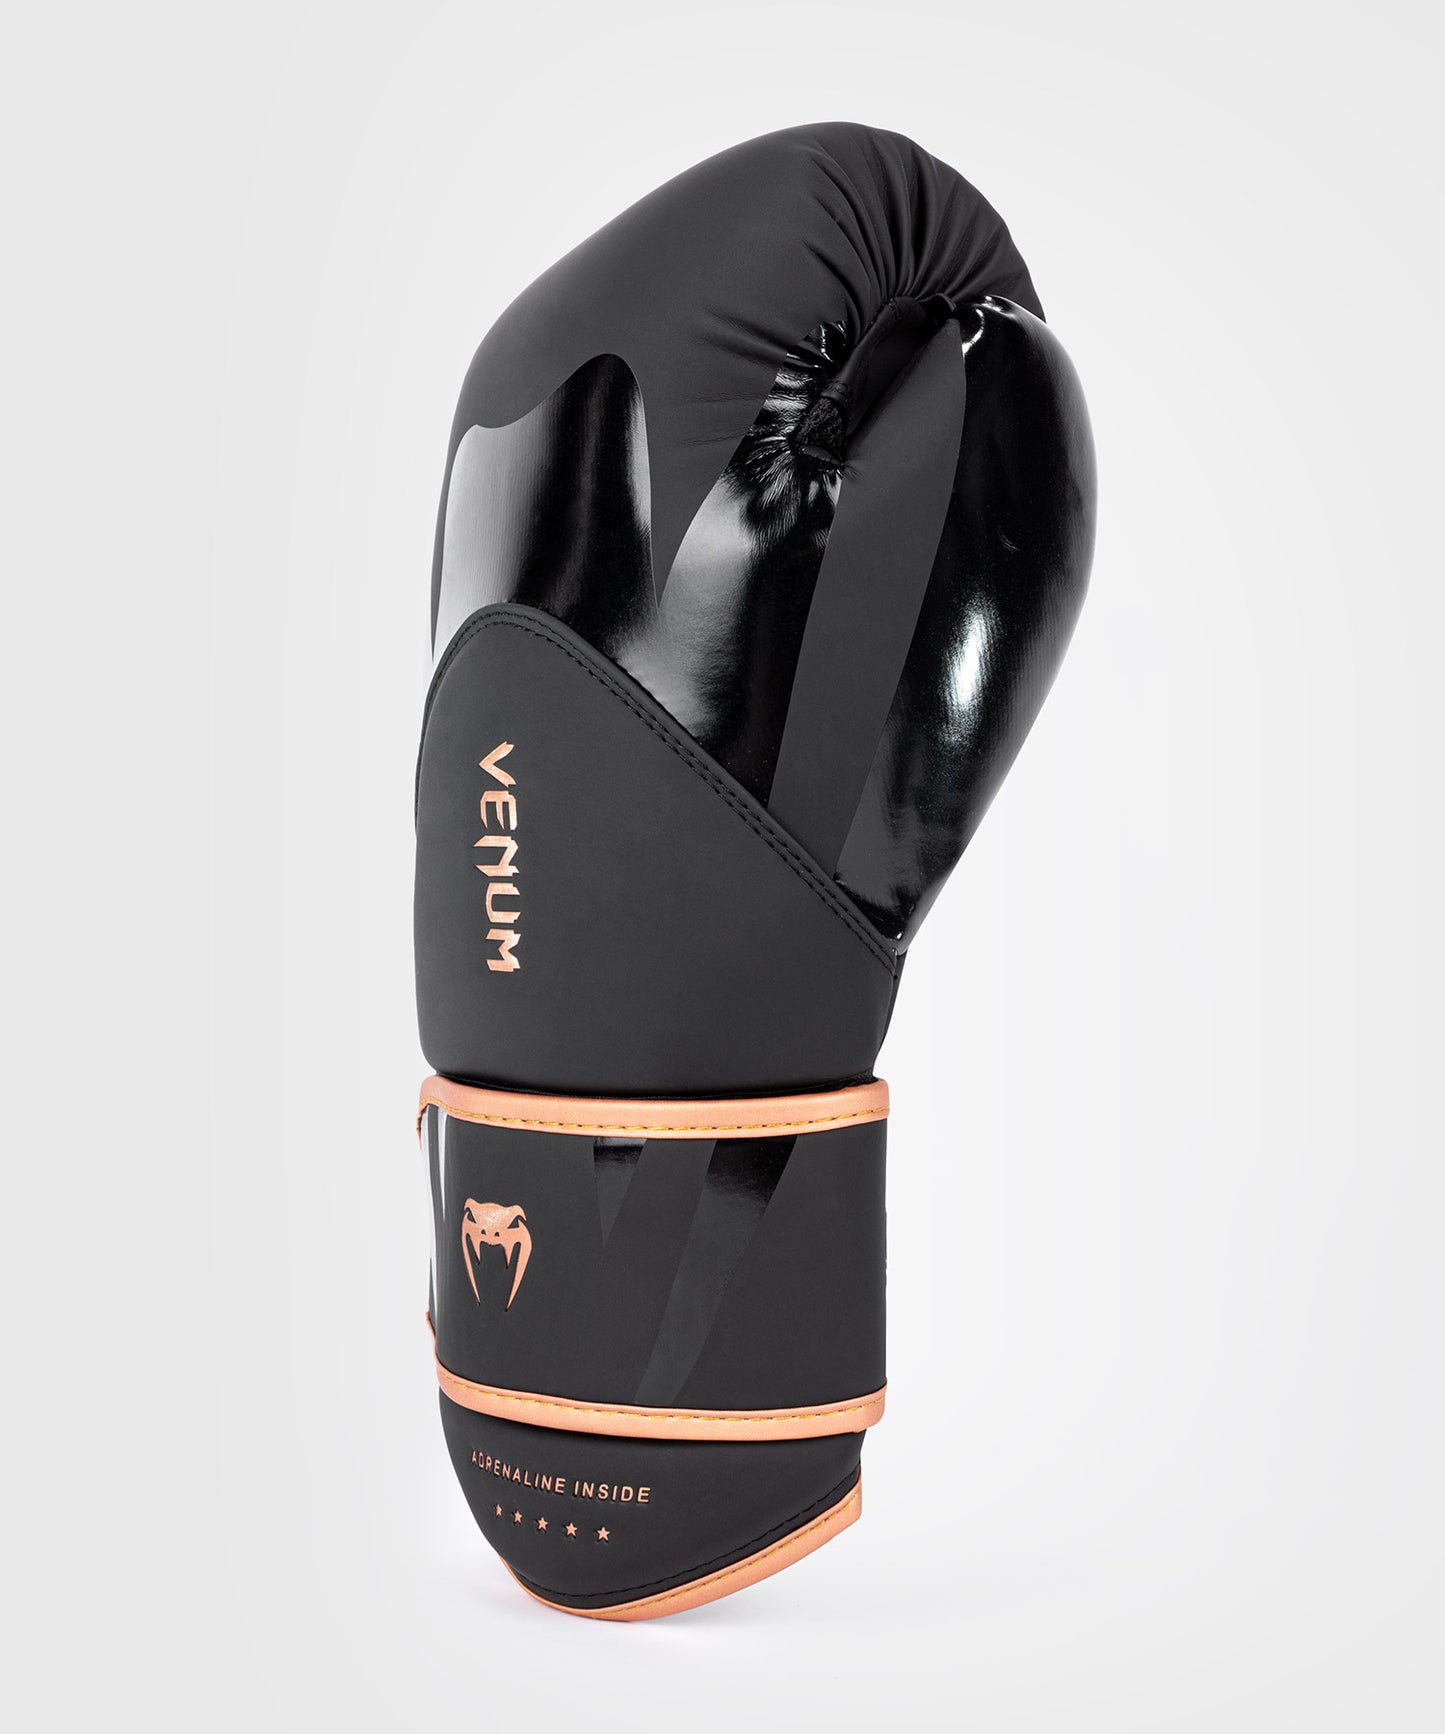 Gants de boxe Venum Challenger 4.0 - Noir/Bronze